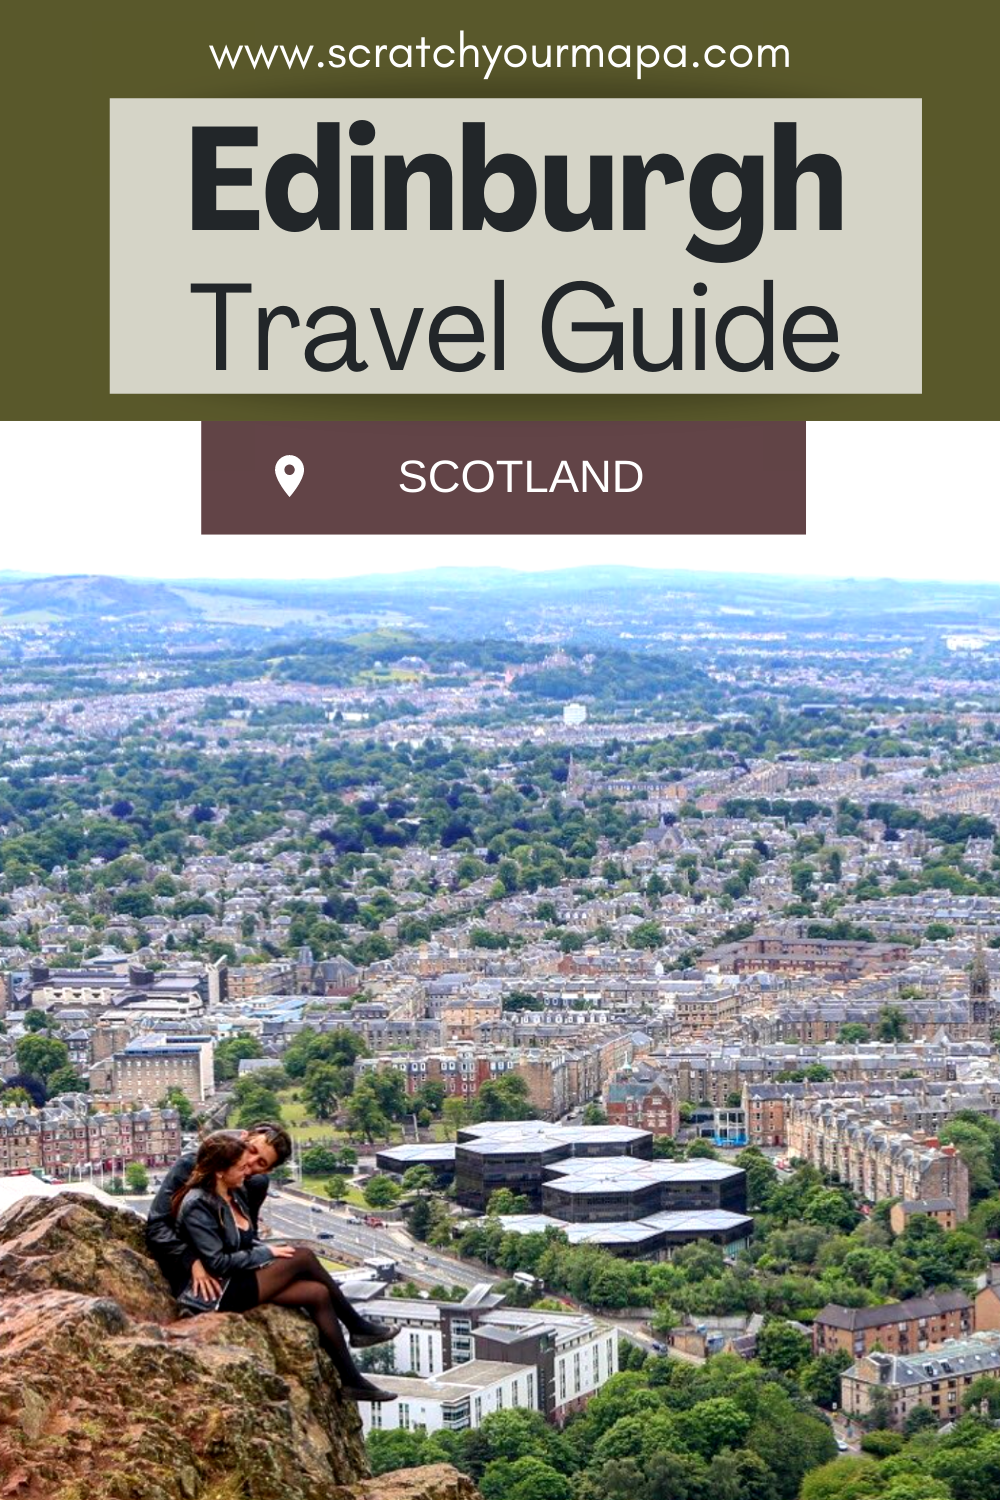 Things to do in Edinburgh Scotland